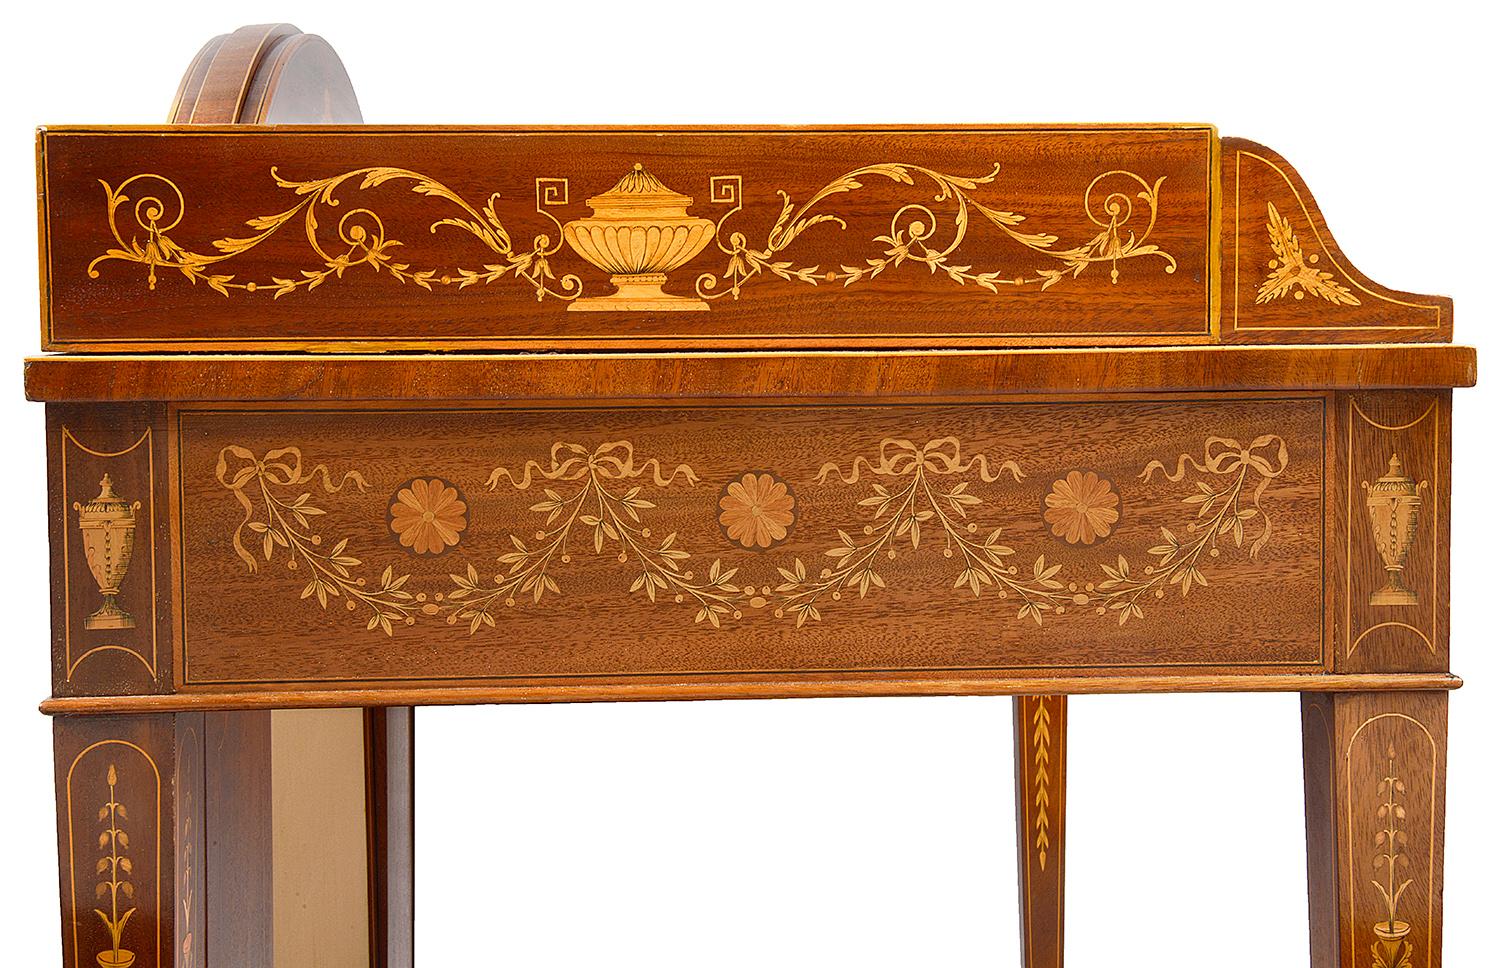 Sheraton Revival Mahogany Inlaid Ladies Desk, 19th Century For Sale 3